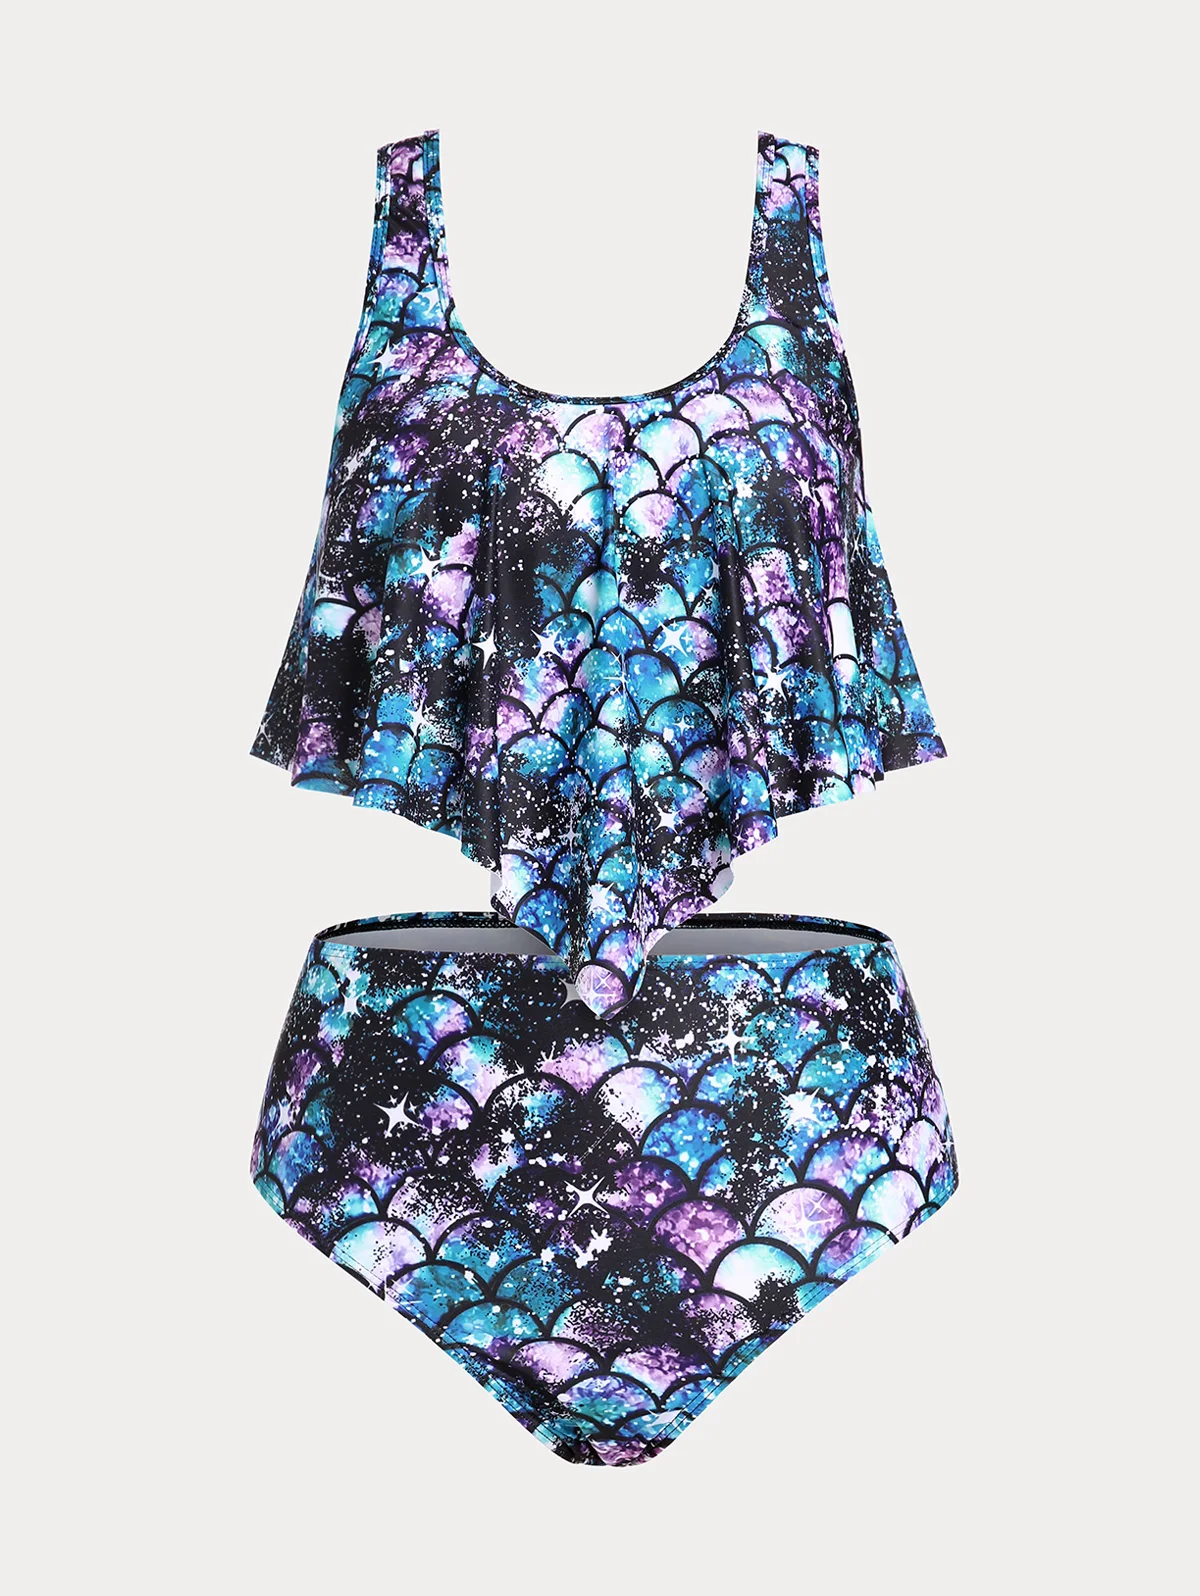 

Plus Size Mermaid Print Tankini Swimsuit 5XL Padded Ruffled Overlay Bathing Suits Bikinis Set Two Piece Summer Beach Swimwear